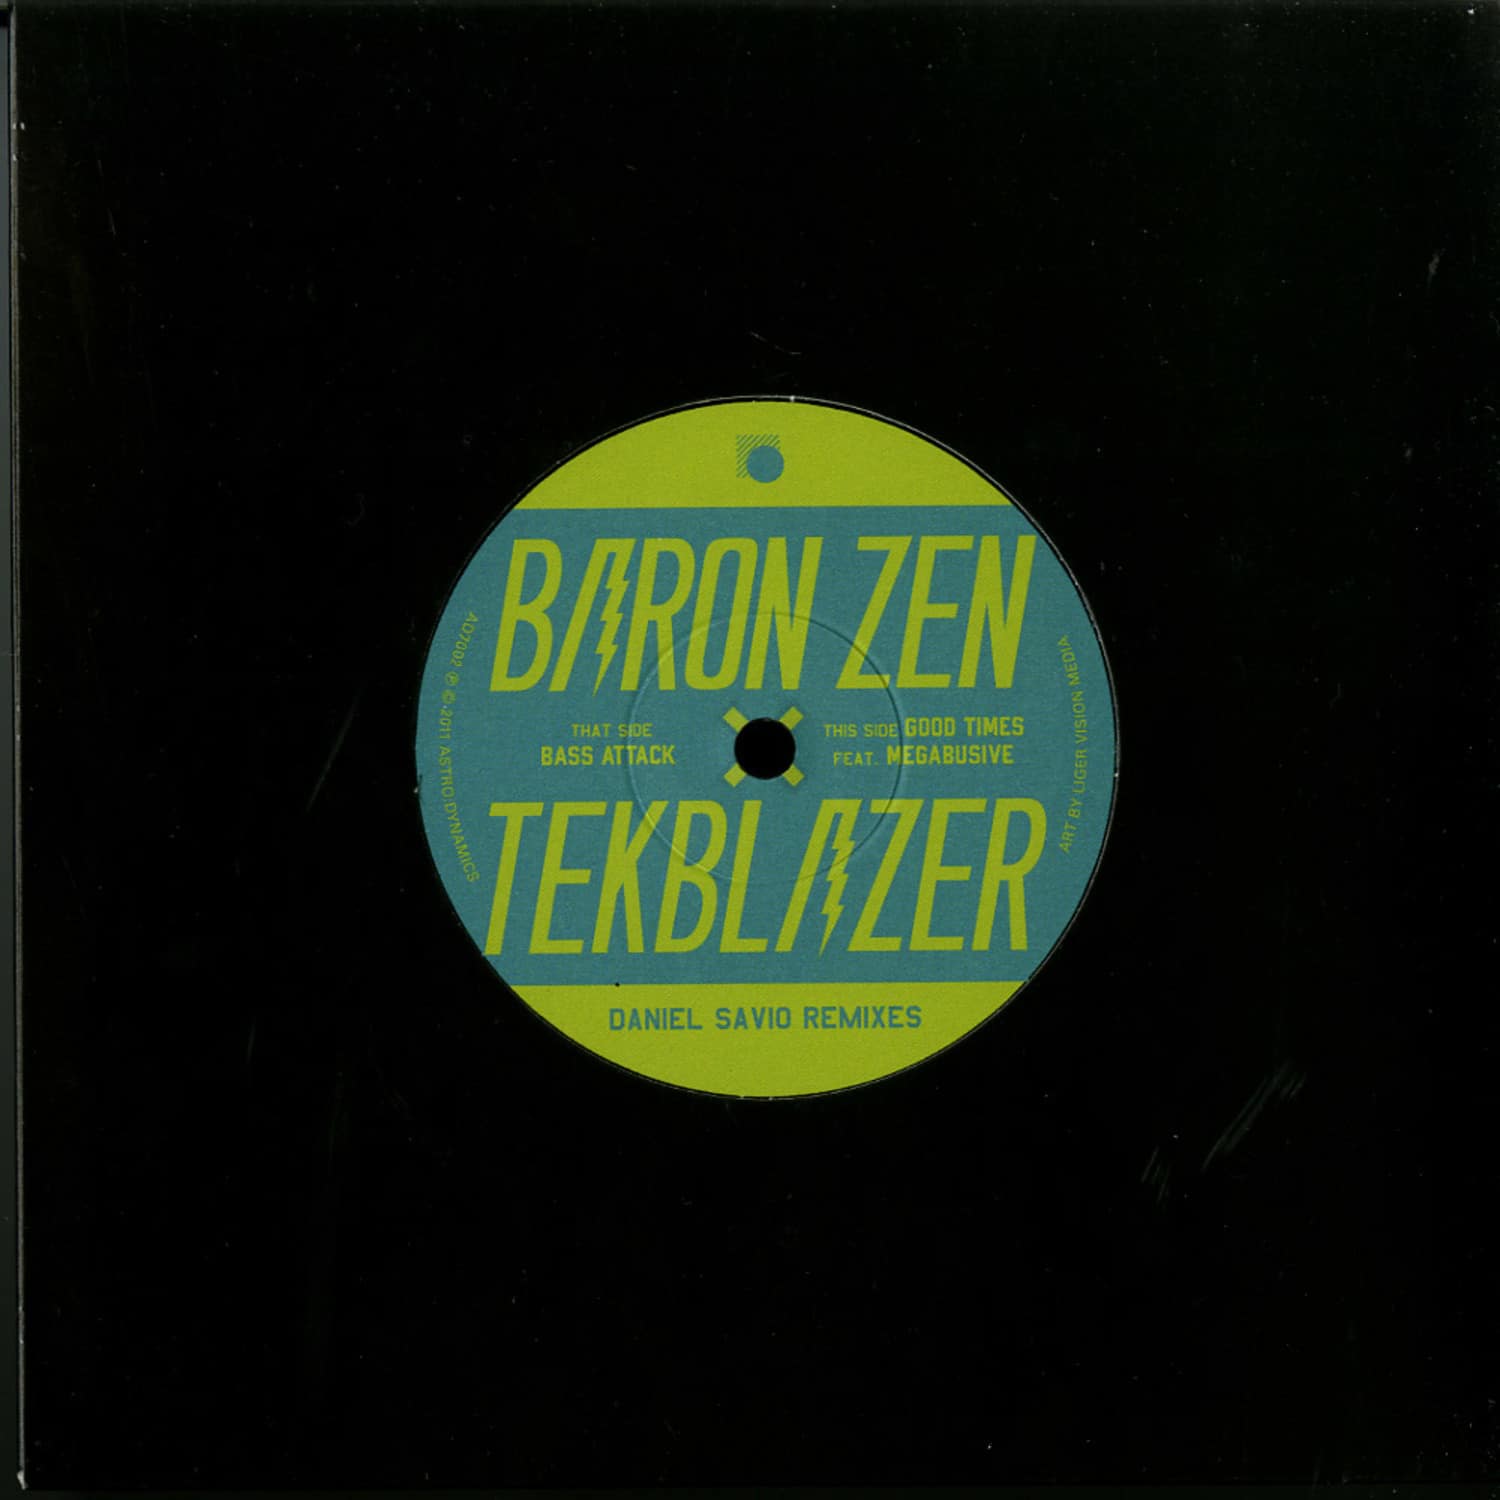 Baron Zen & Tekblazer - BASS ATTACK / GOOD TIMES 